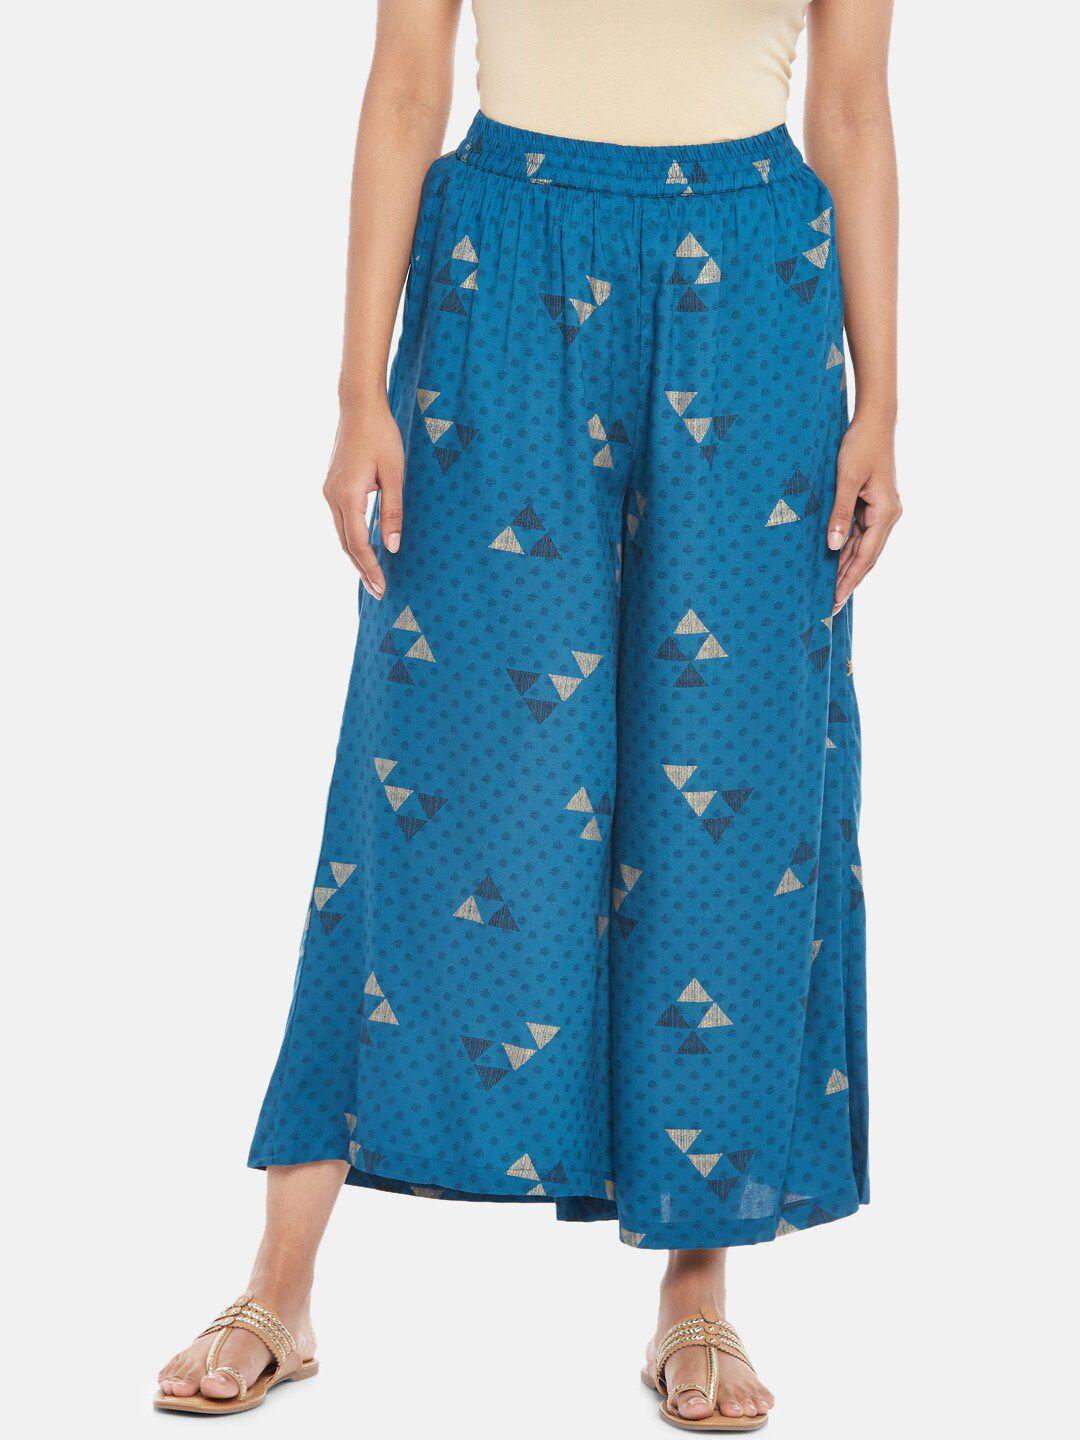 rangmanch by pantaloons women blue printed ethnic palazzos